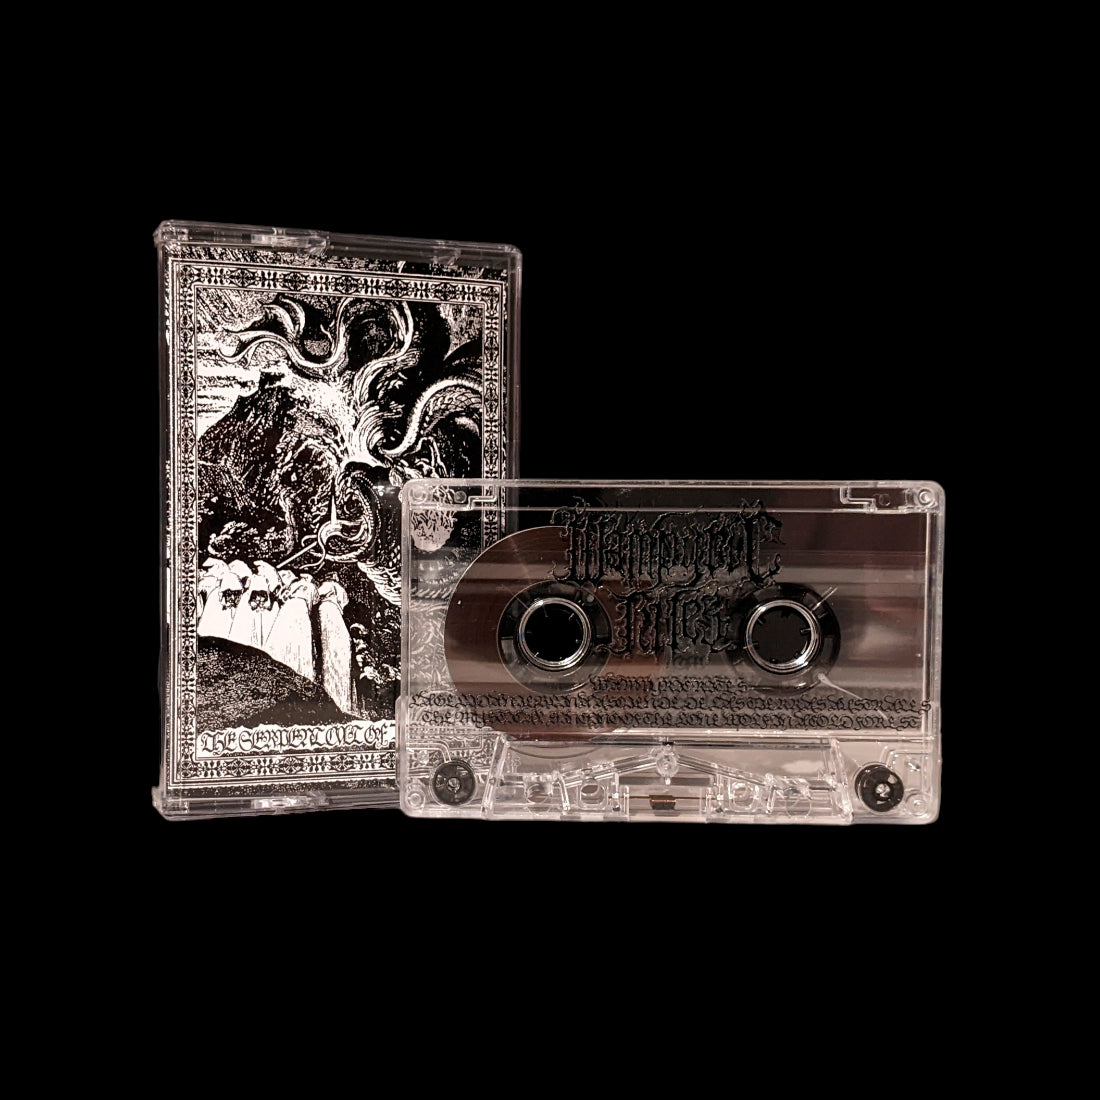 WAMPYRIC RITES / MOLOCH "The Serpent Cult of Darkness" Split Cassette Tape